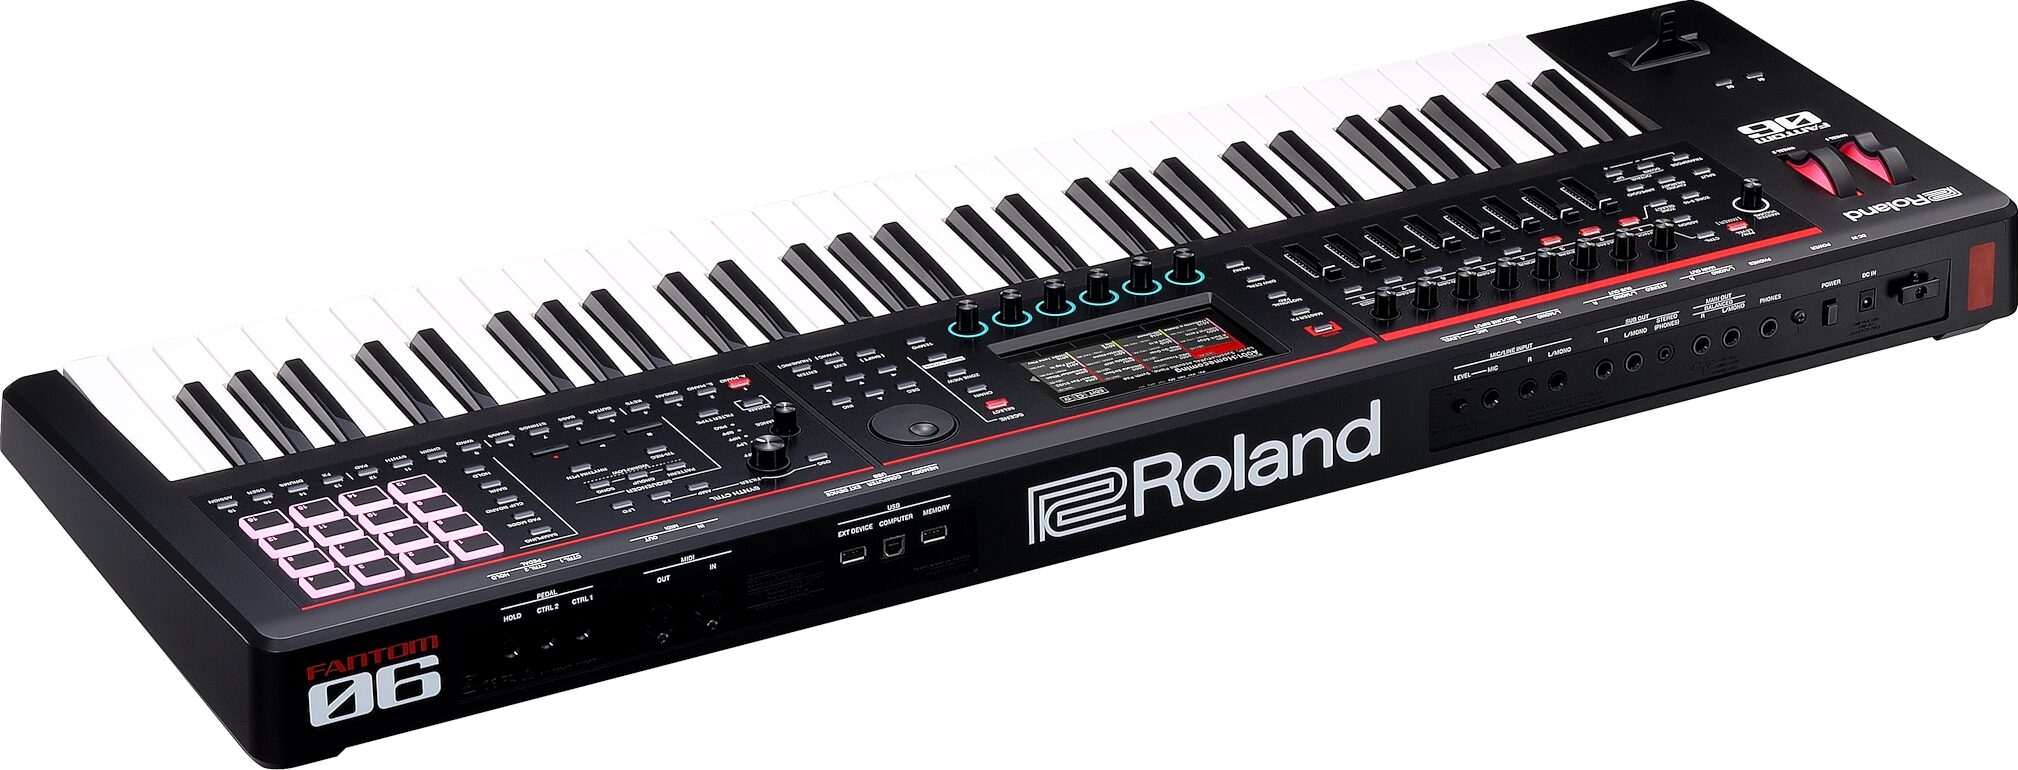 Roland FANTOM-06 Synthesizer Workstation Keyboard